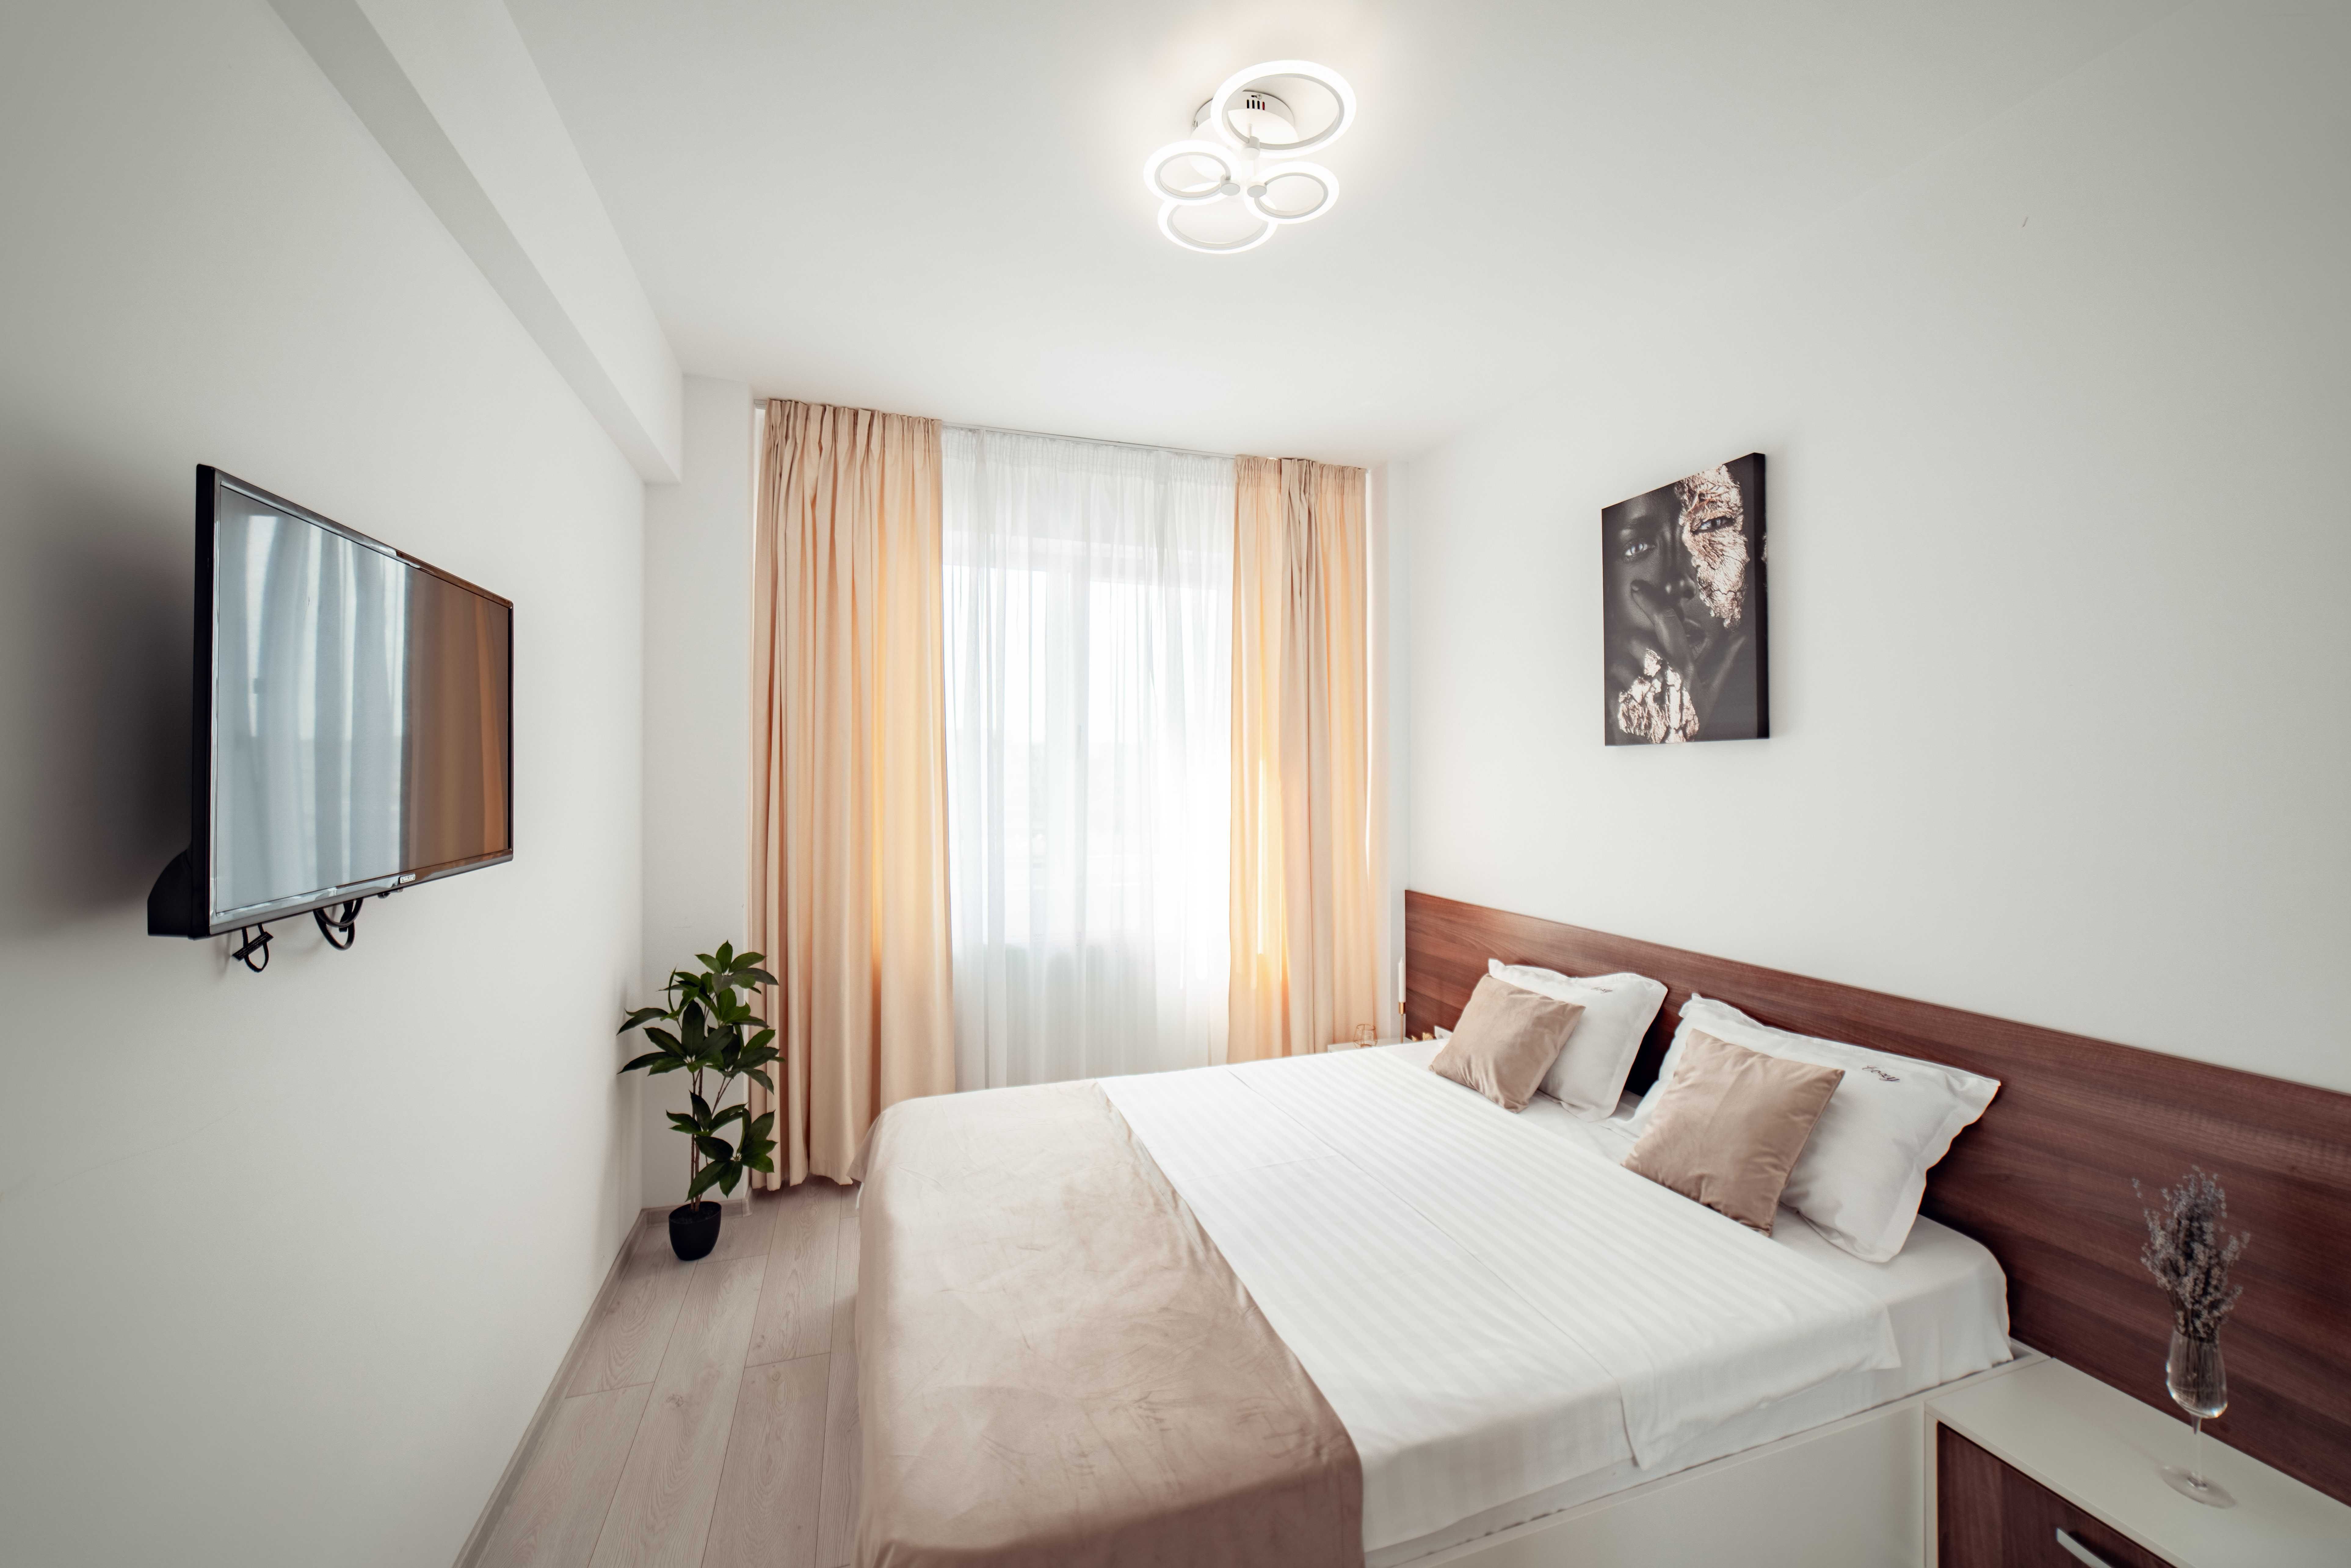 Cazare Palas/Newton/Copou in Apartamente de Lux - Regim Hotelier